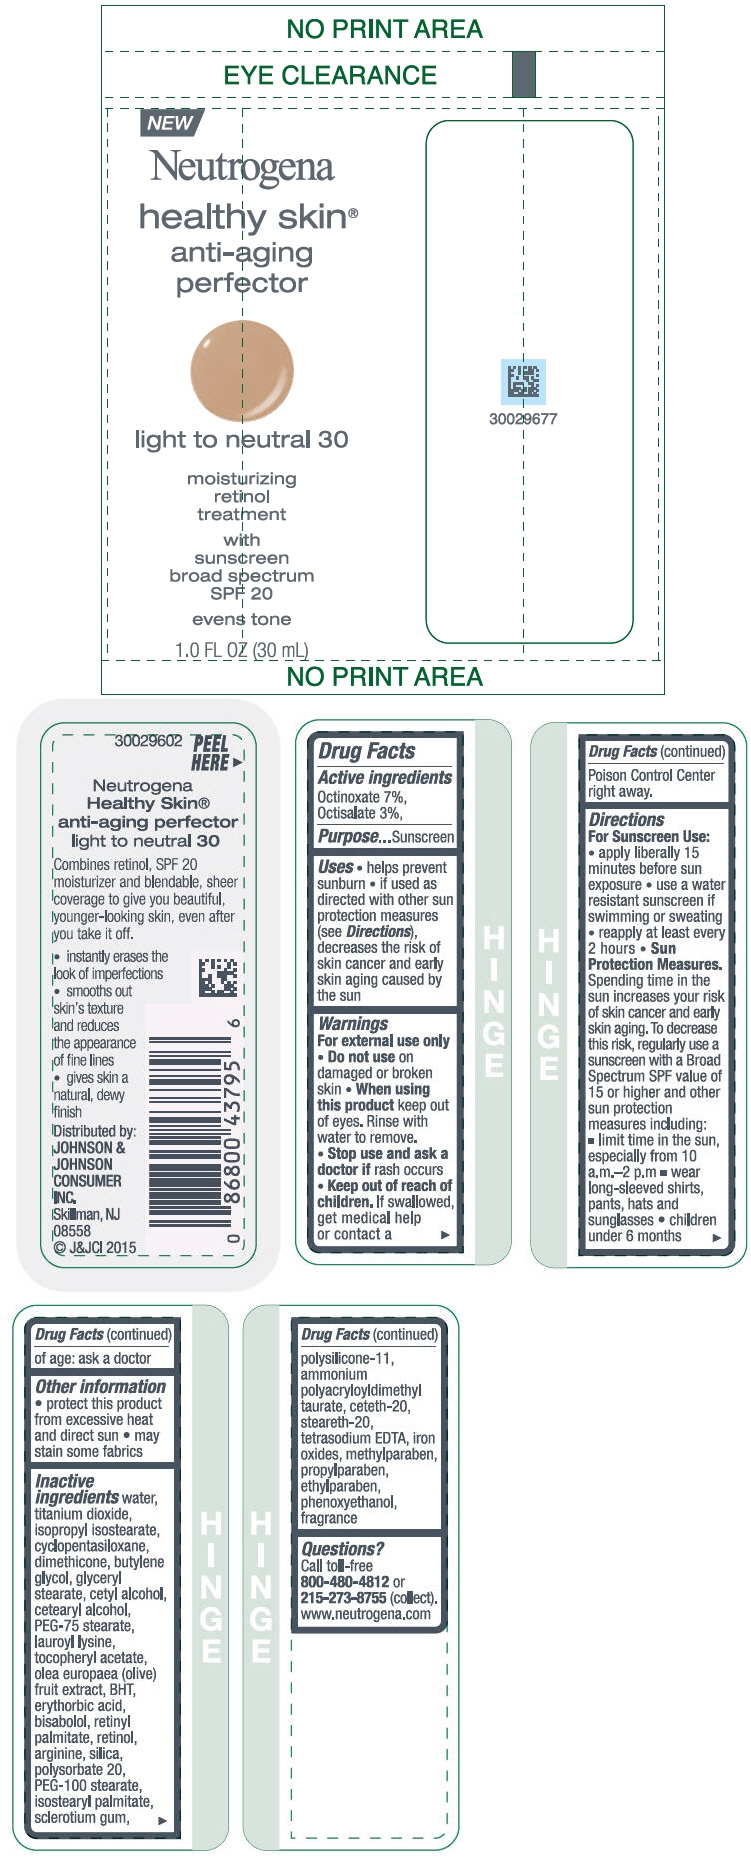 PRINCIPAL DISPLAY PANEL - 30 mL Bottle Label - light to neutral 30